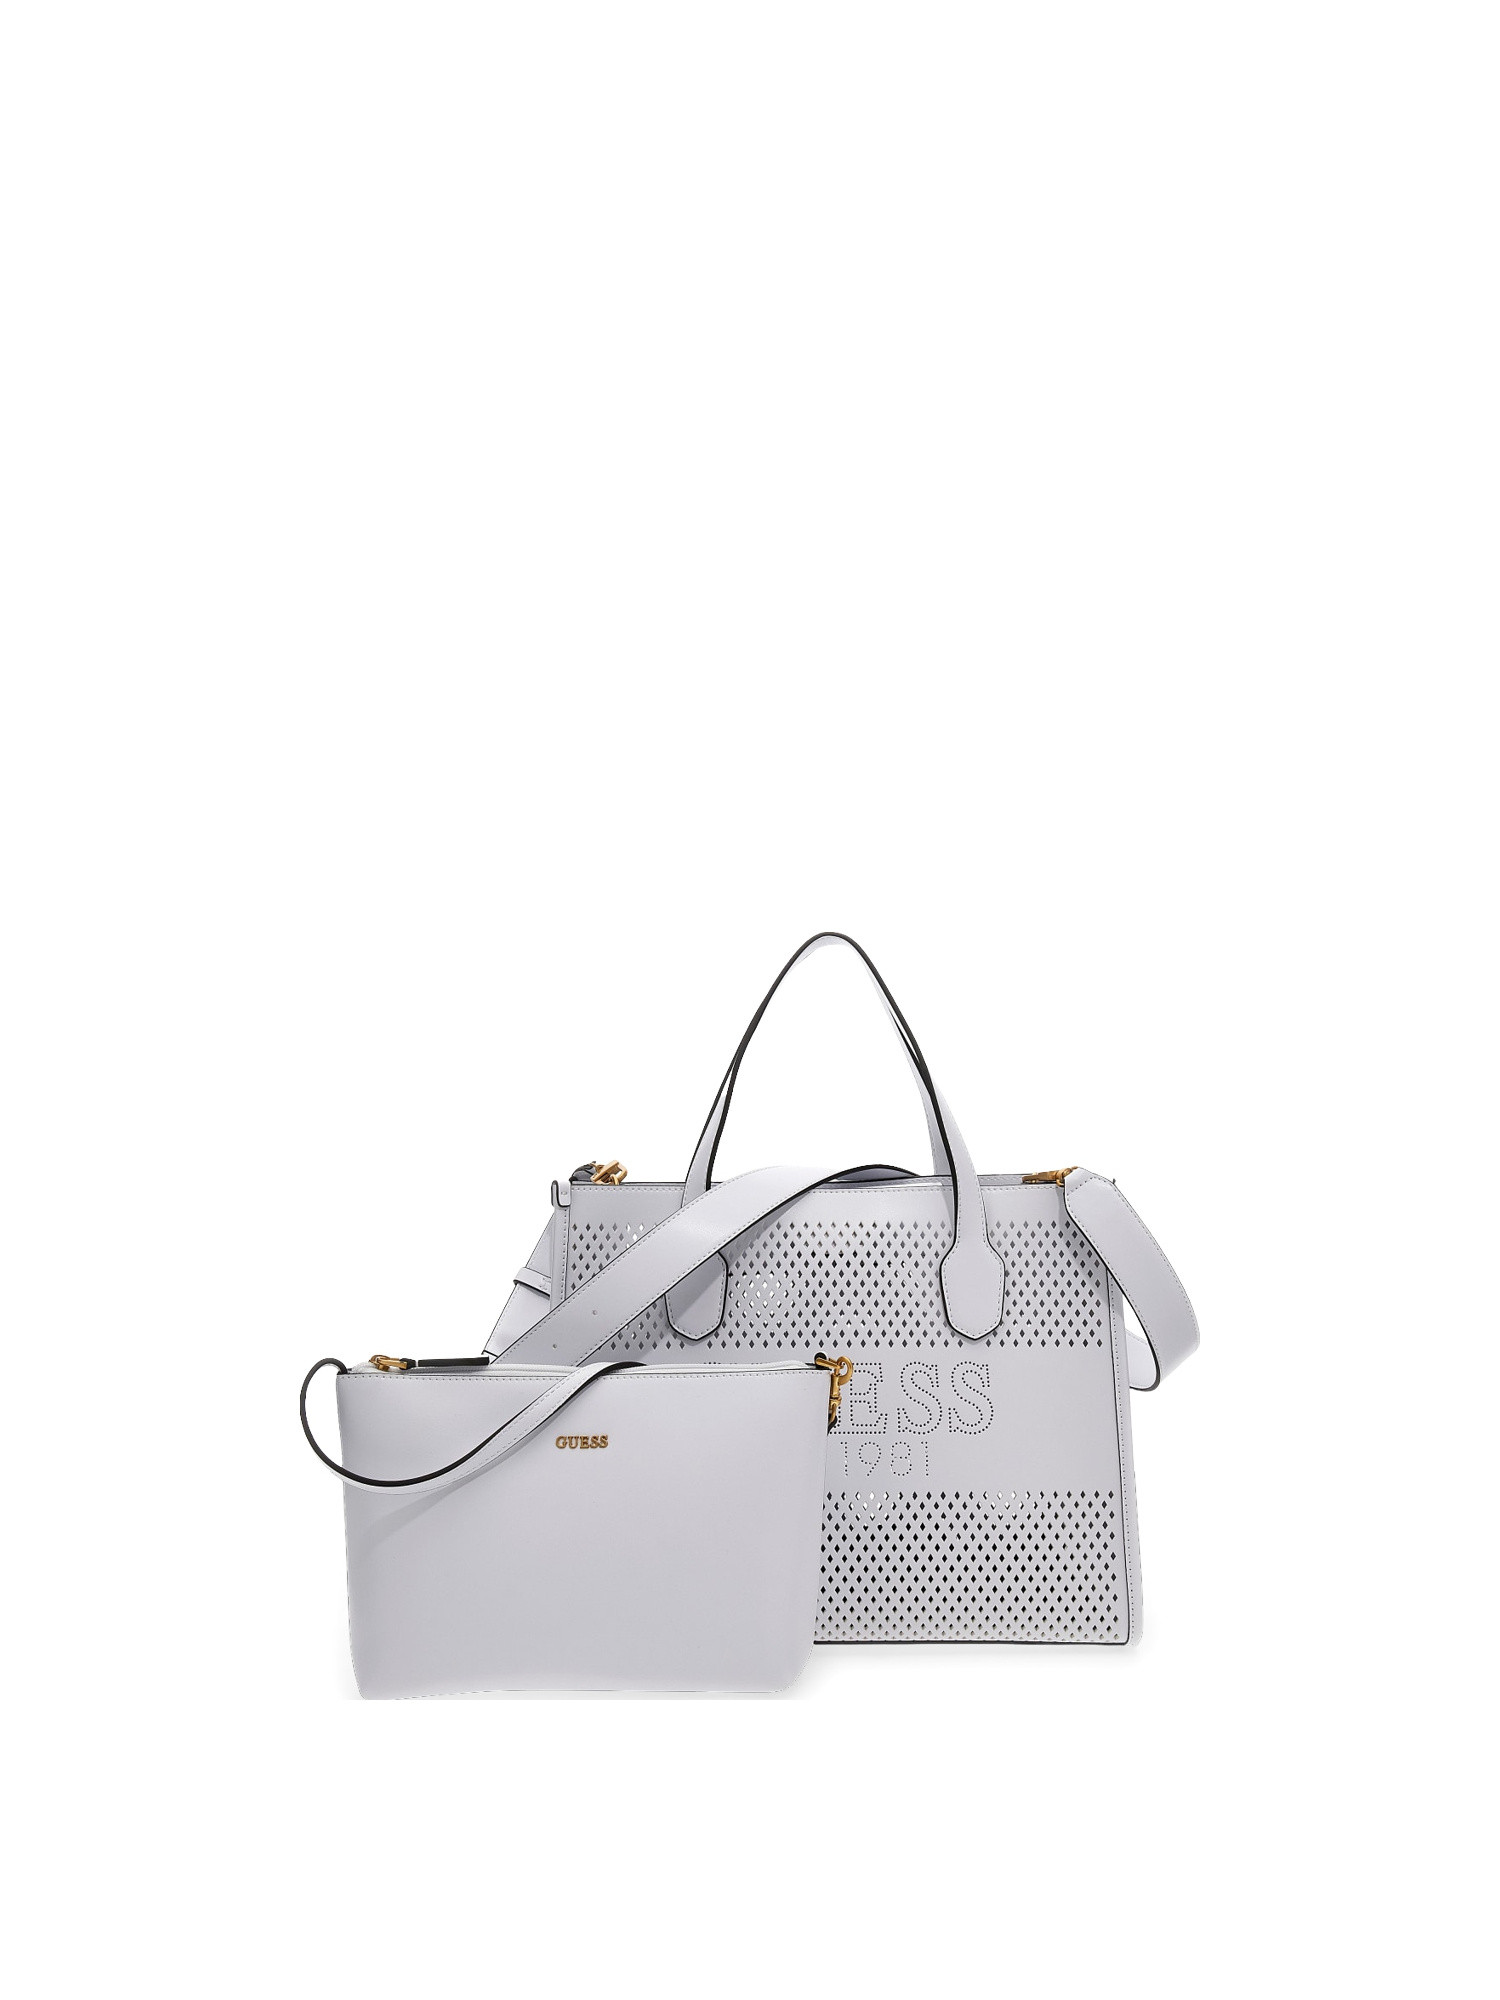 Guess - Katey perforated handbag, White, large image number 2